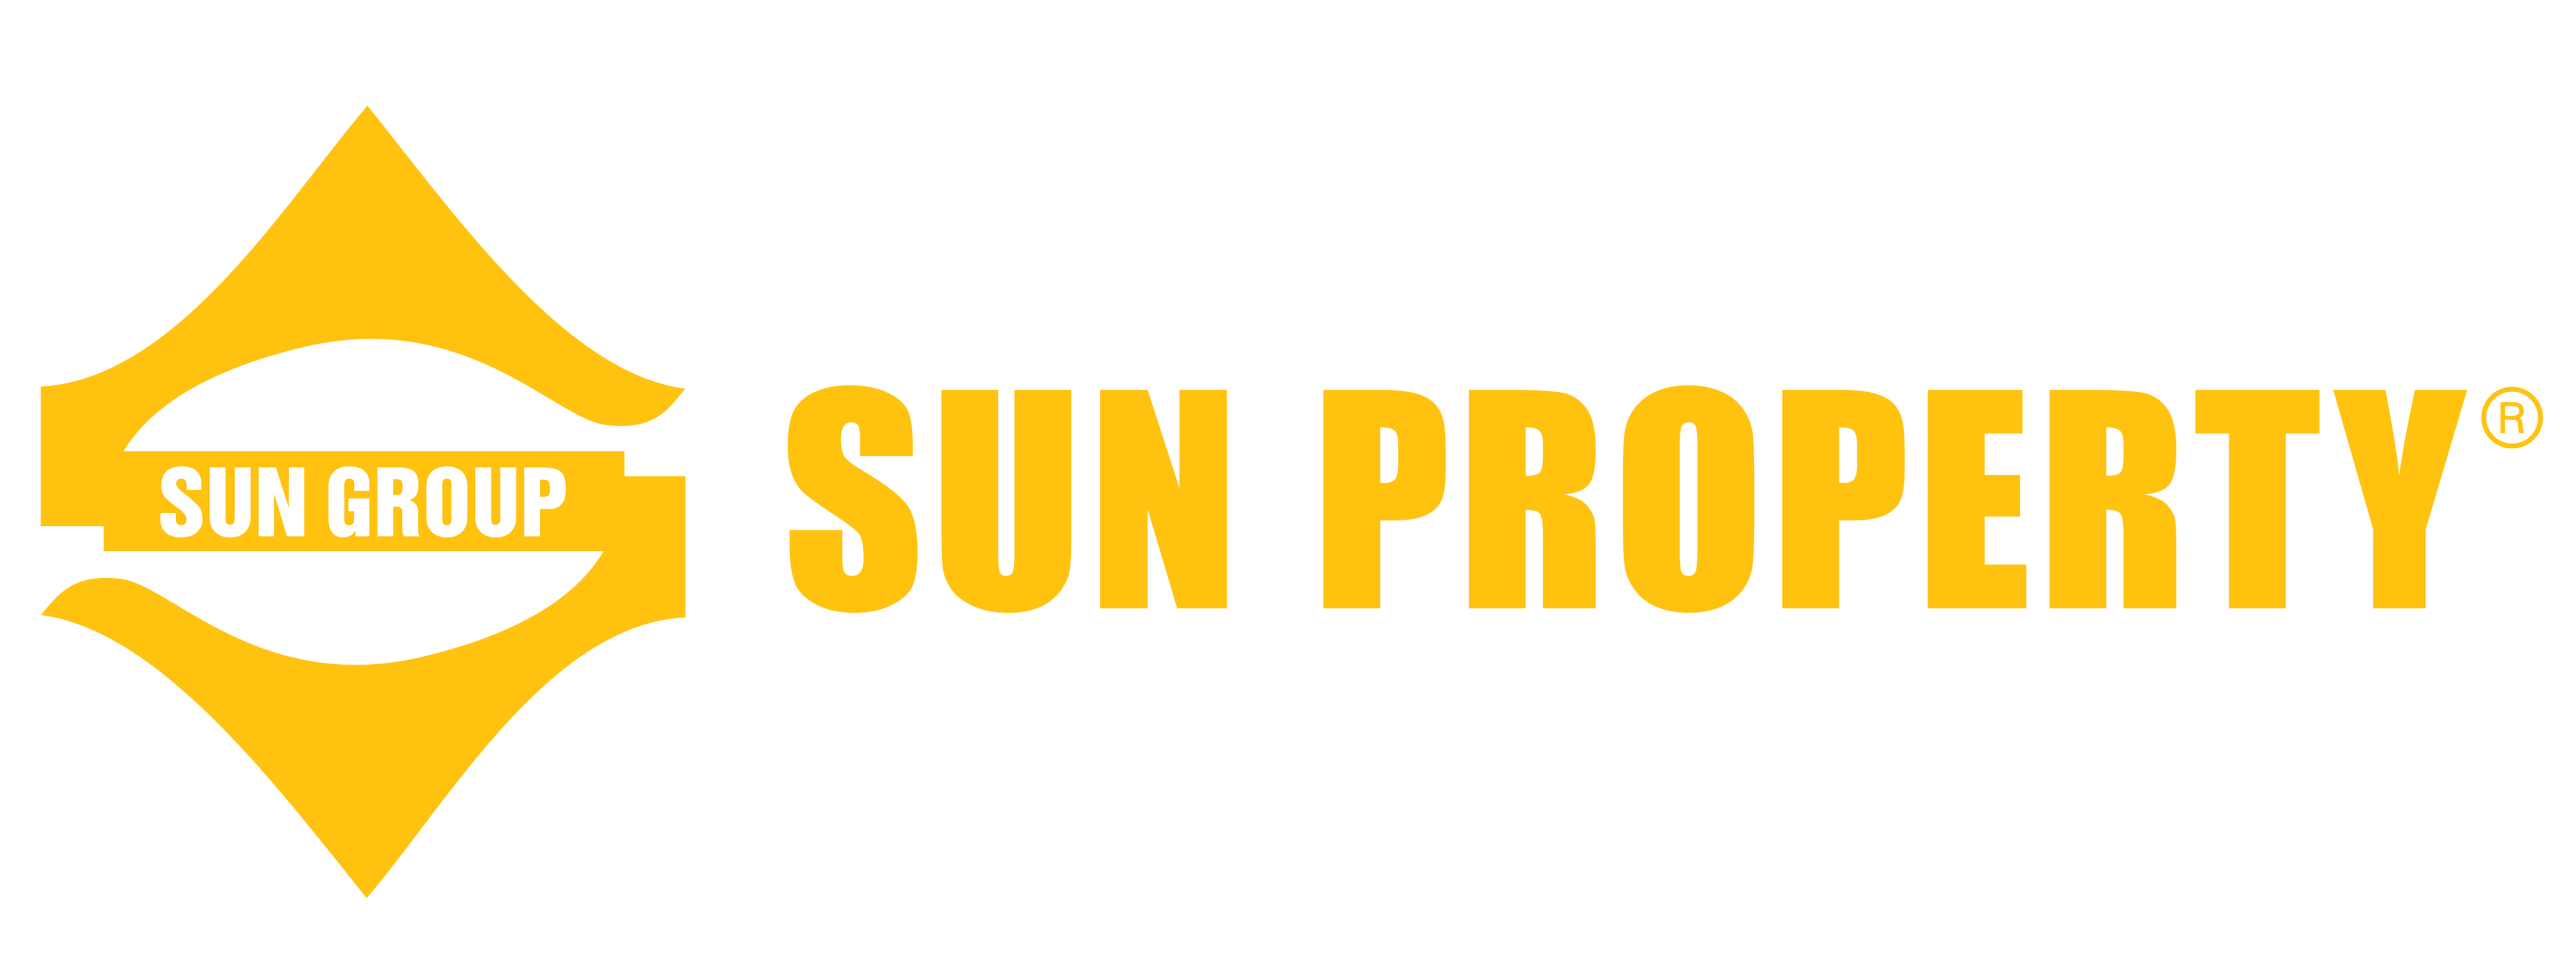 Sun Group Hòa Bình